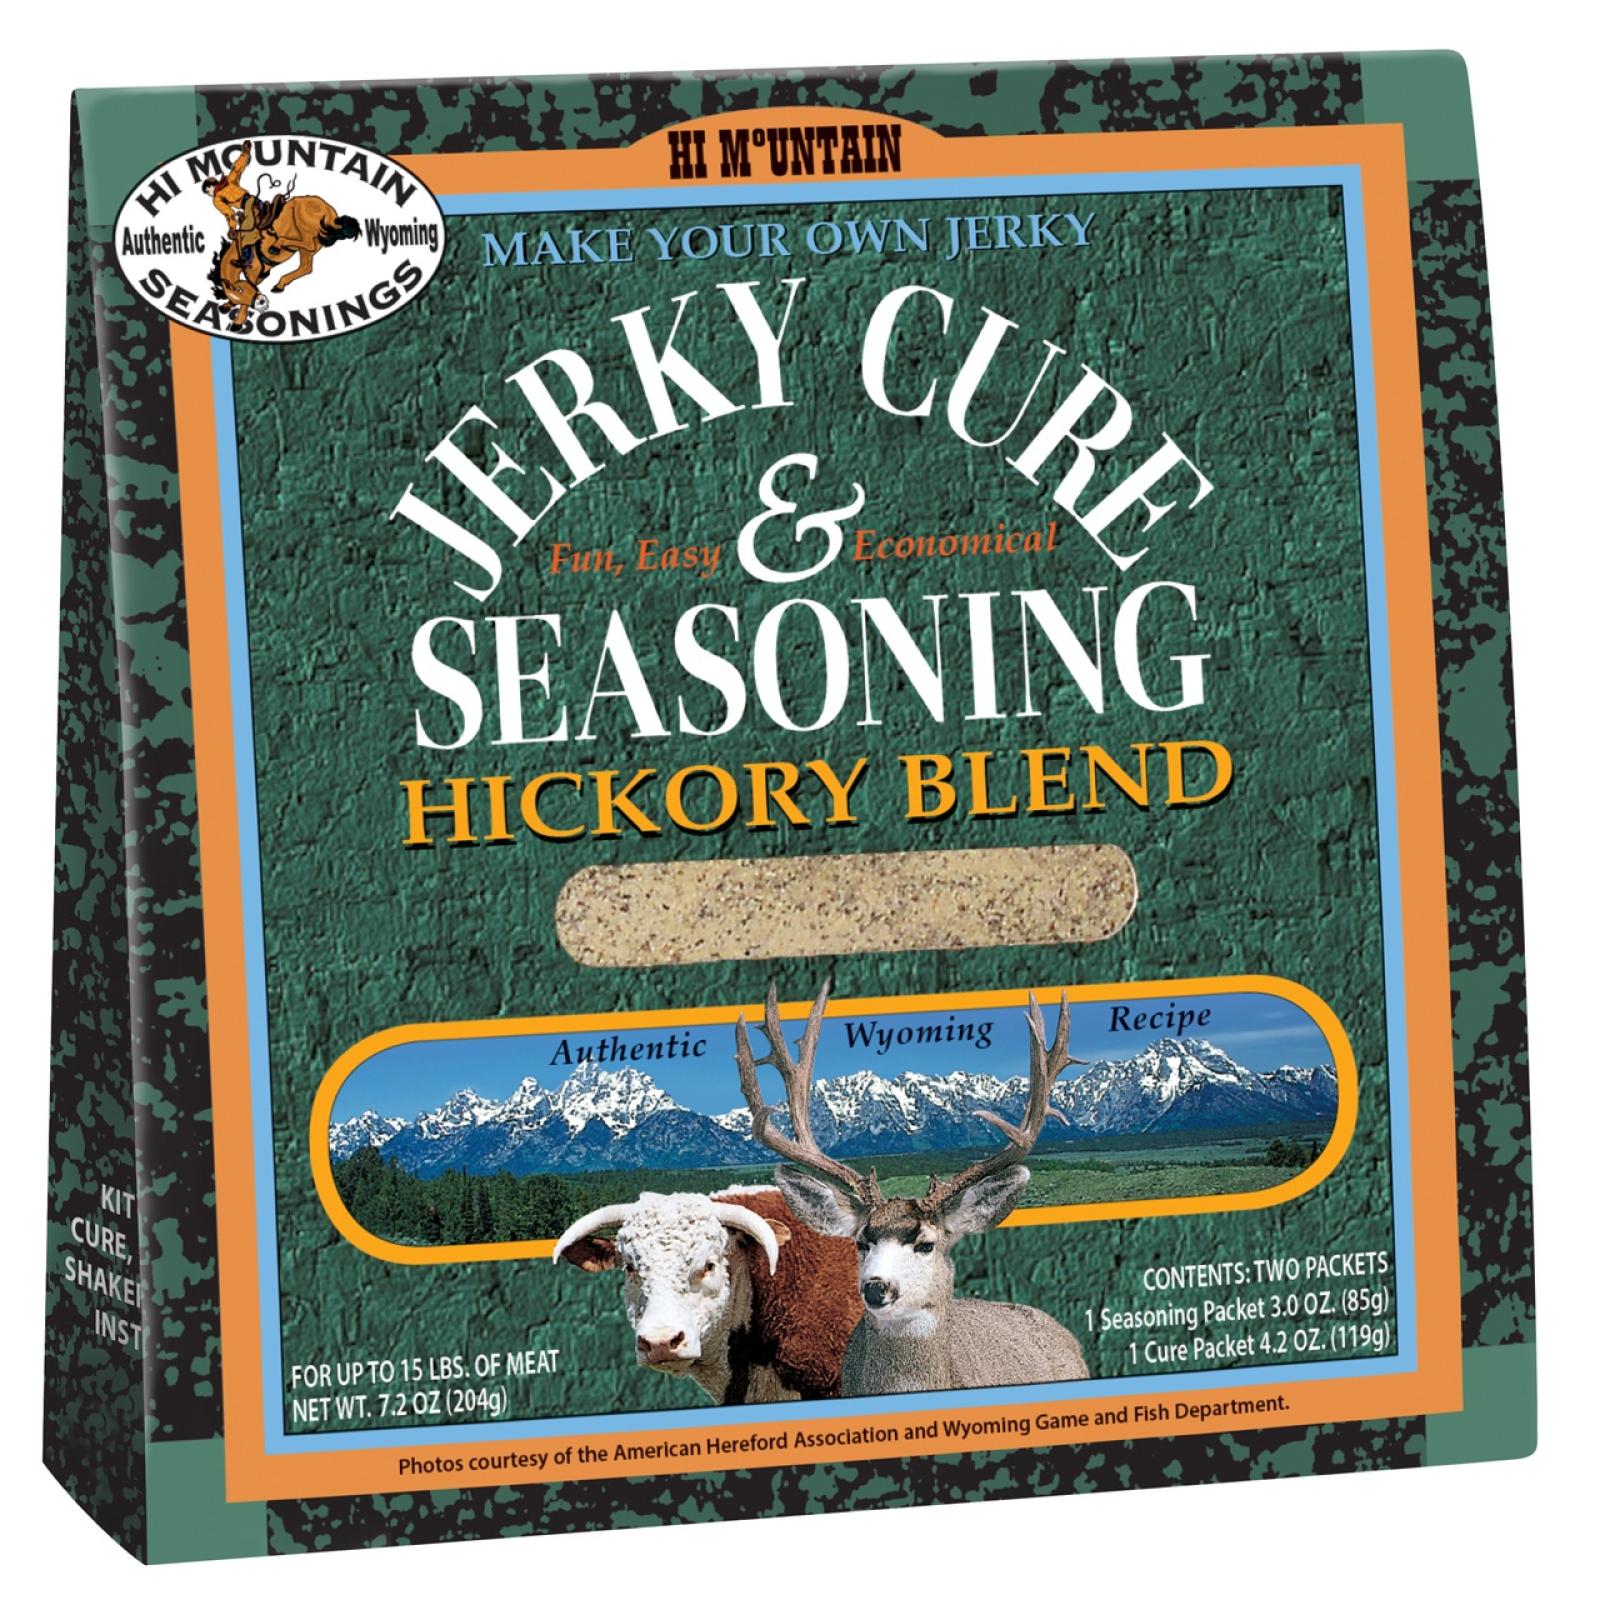 Hi Mountain Hickory Blend Jerky Kit